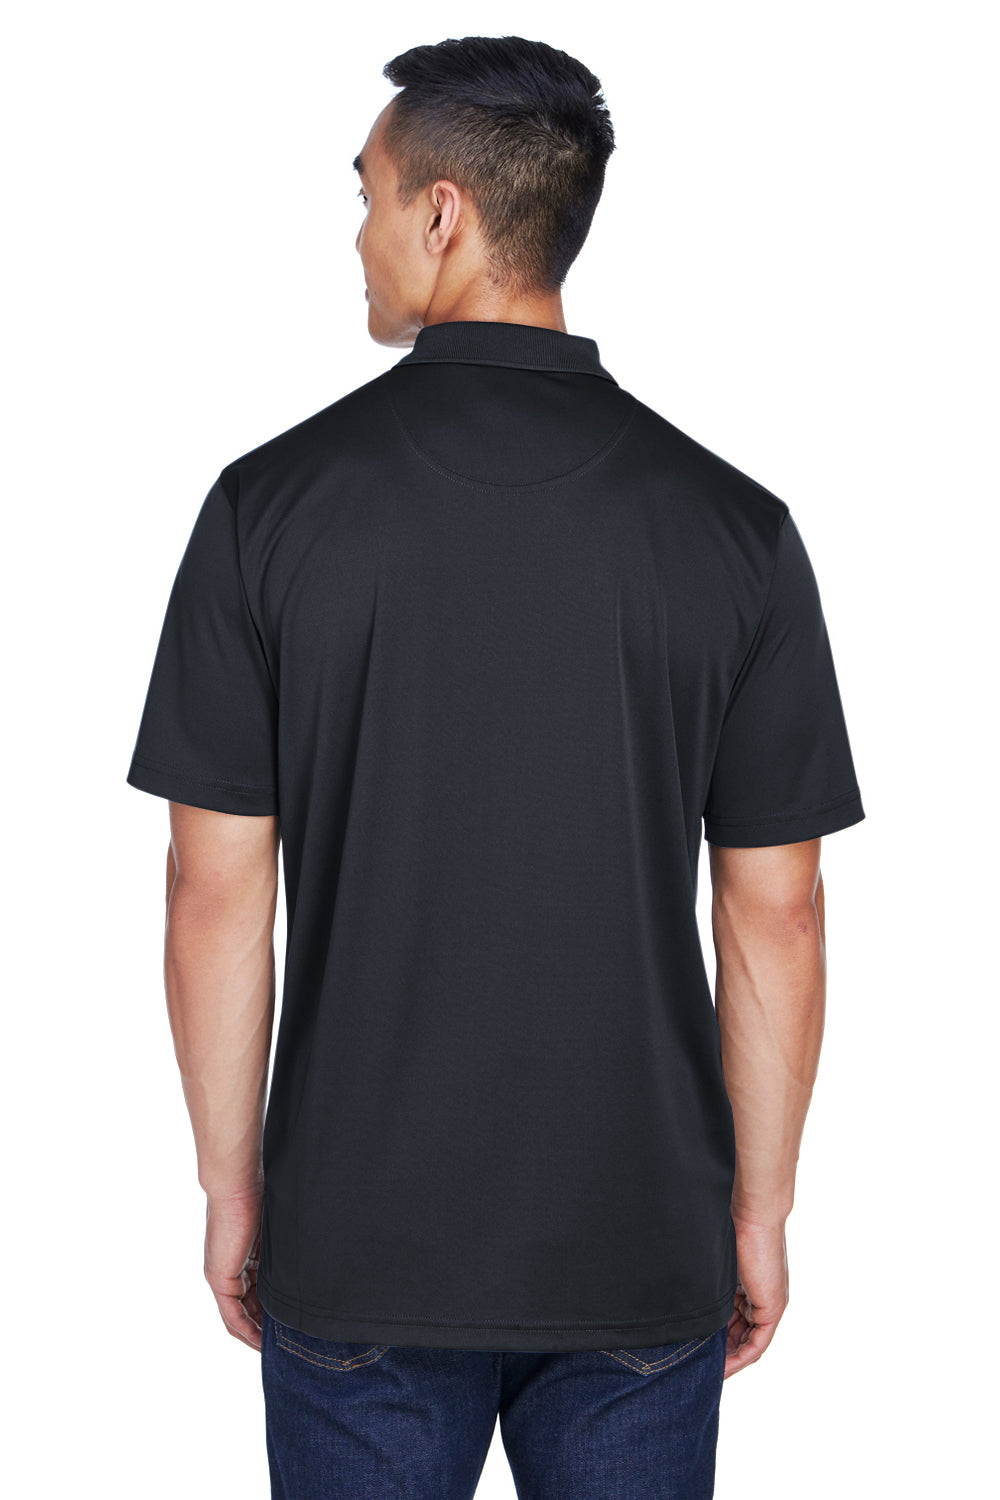 UltraClub 8405 Mens Cool & Dry Moisture Wicking Short Sleeve Polo Shirt Black Back